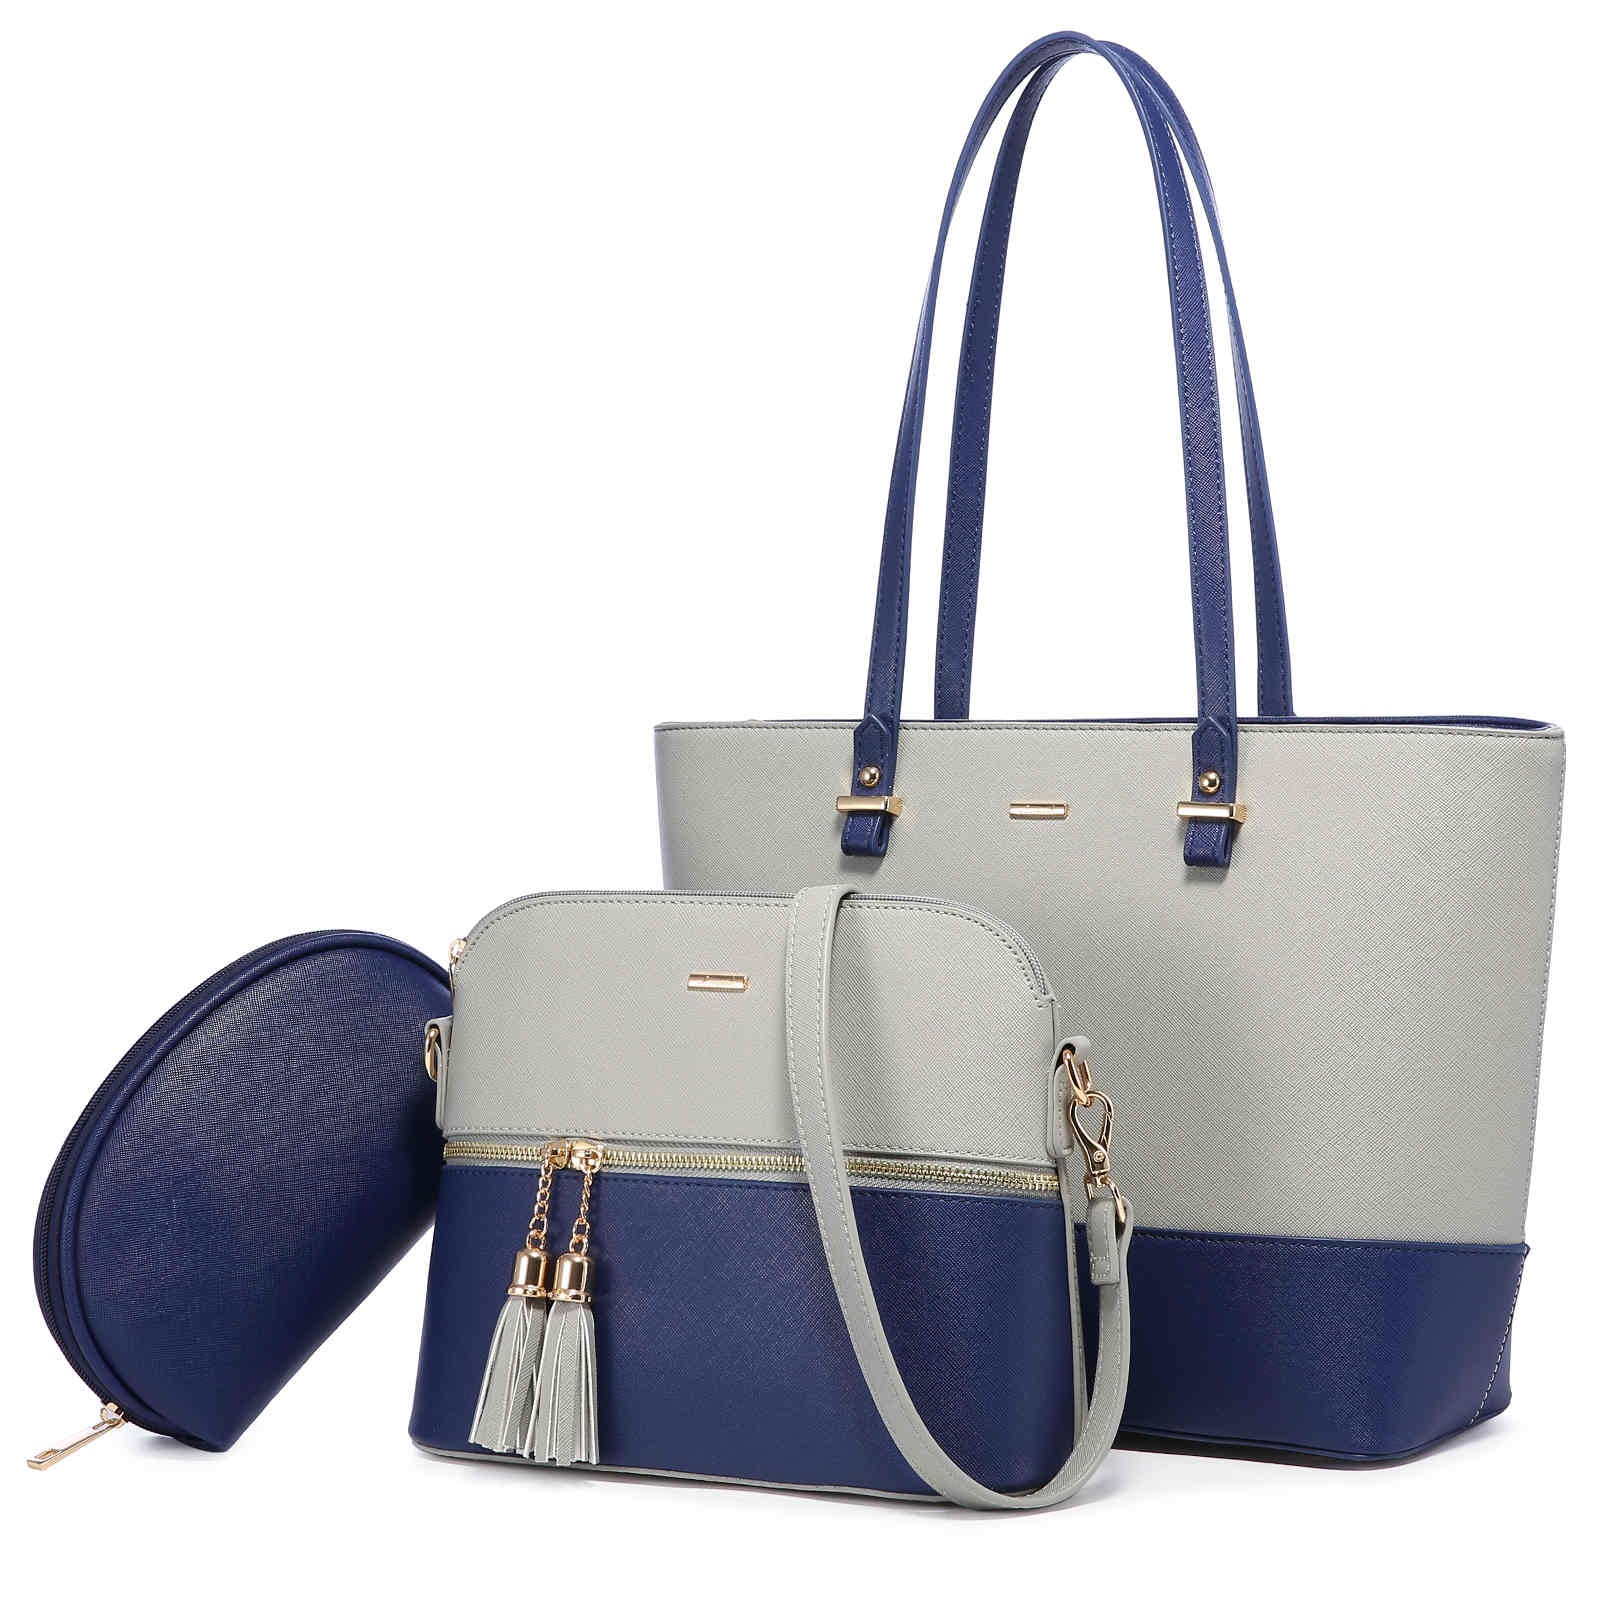 LOVEVOOK Purses and Handbags for Women Fashion Tote Bags Shoulder Bag Top Handle Satchel Bags Purse Set 3pcs